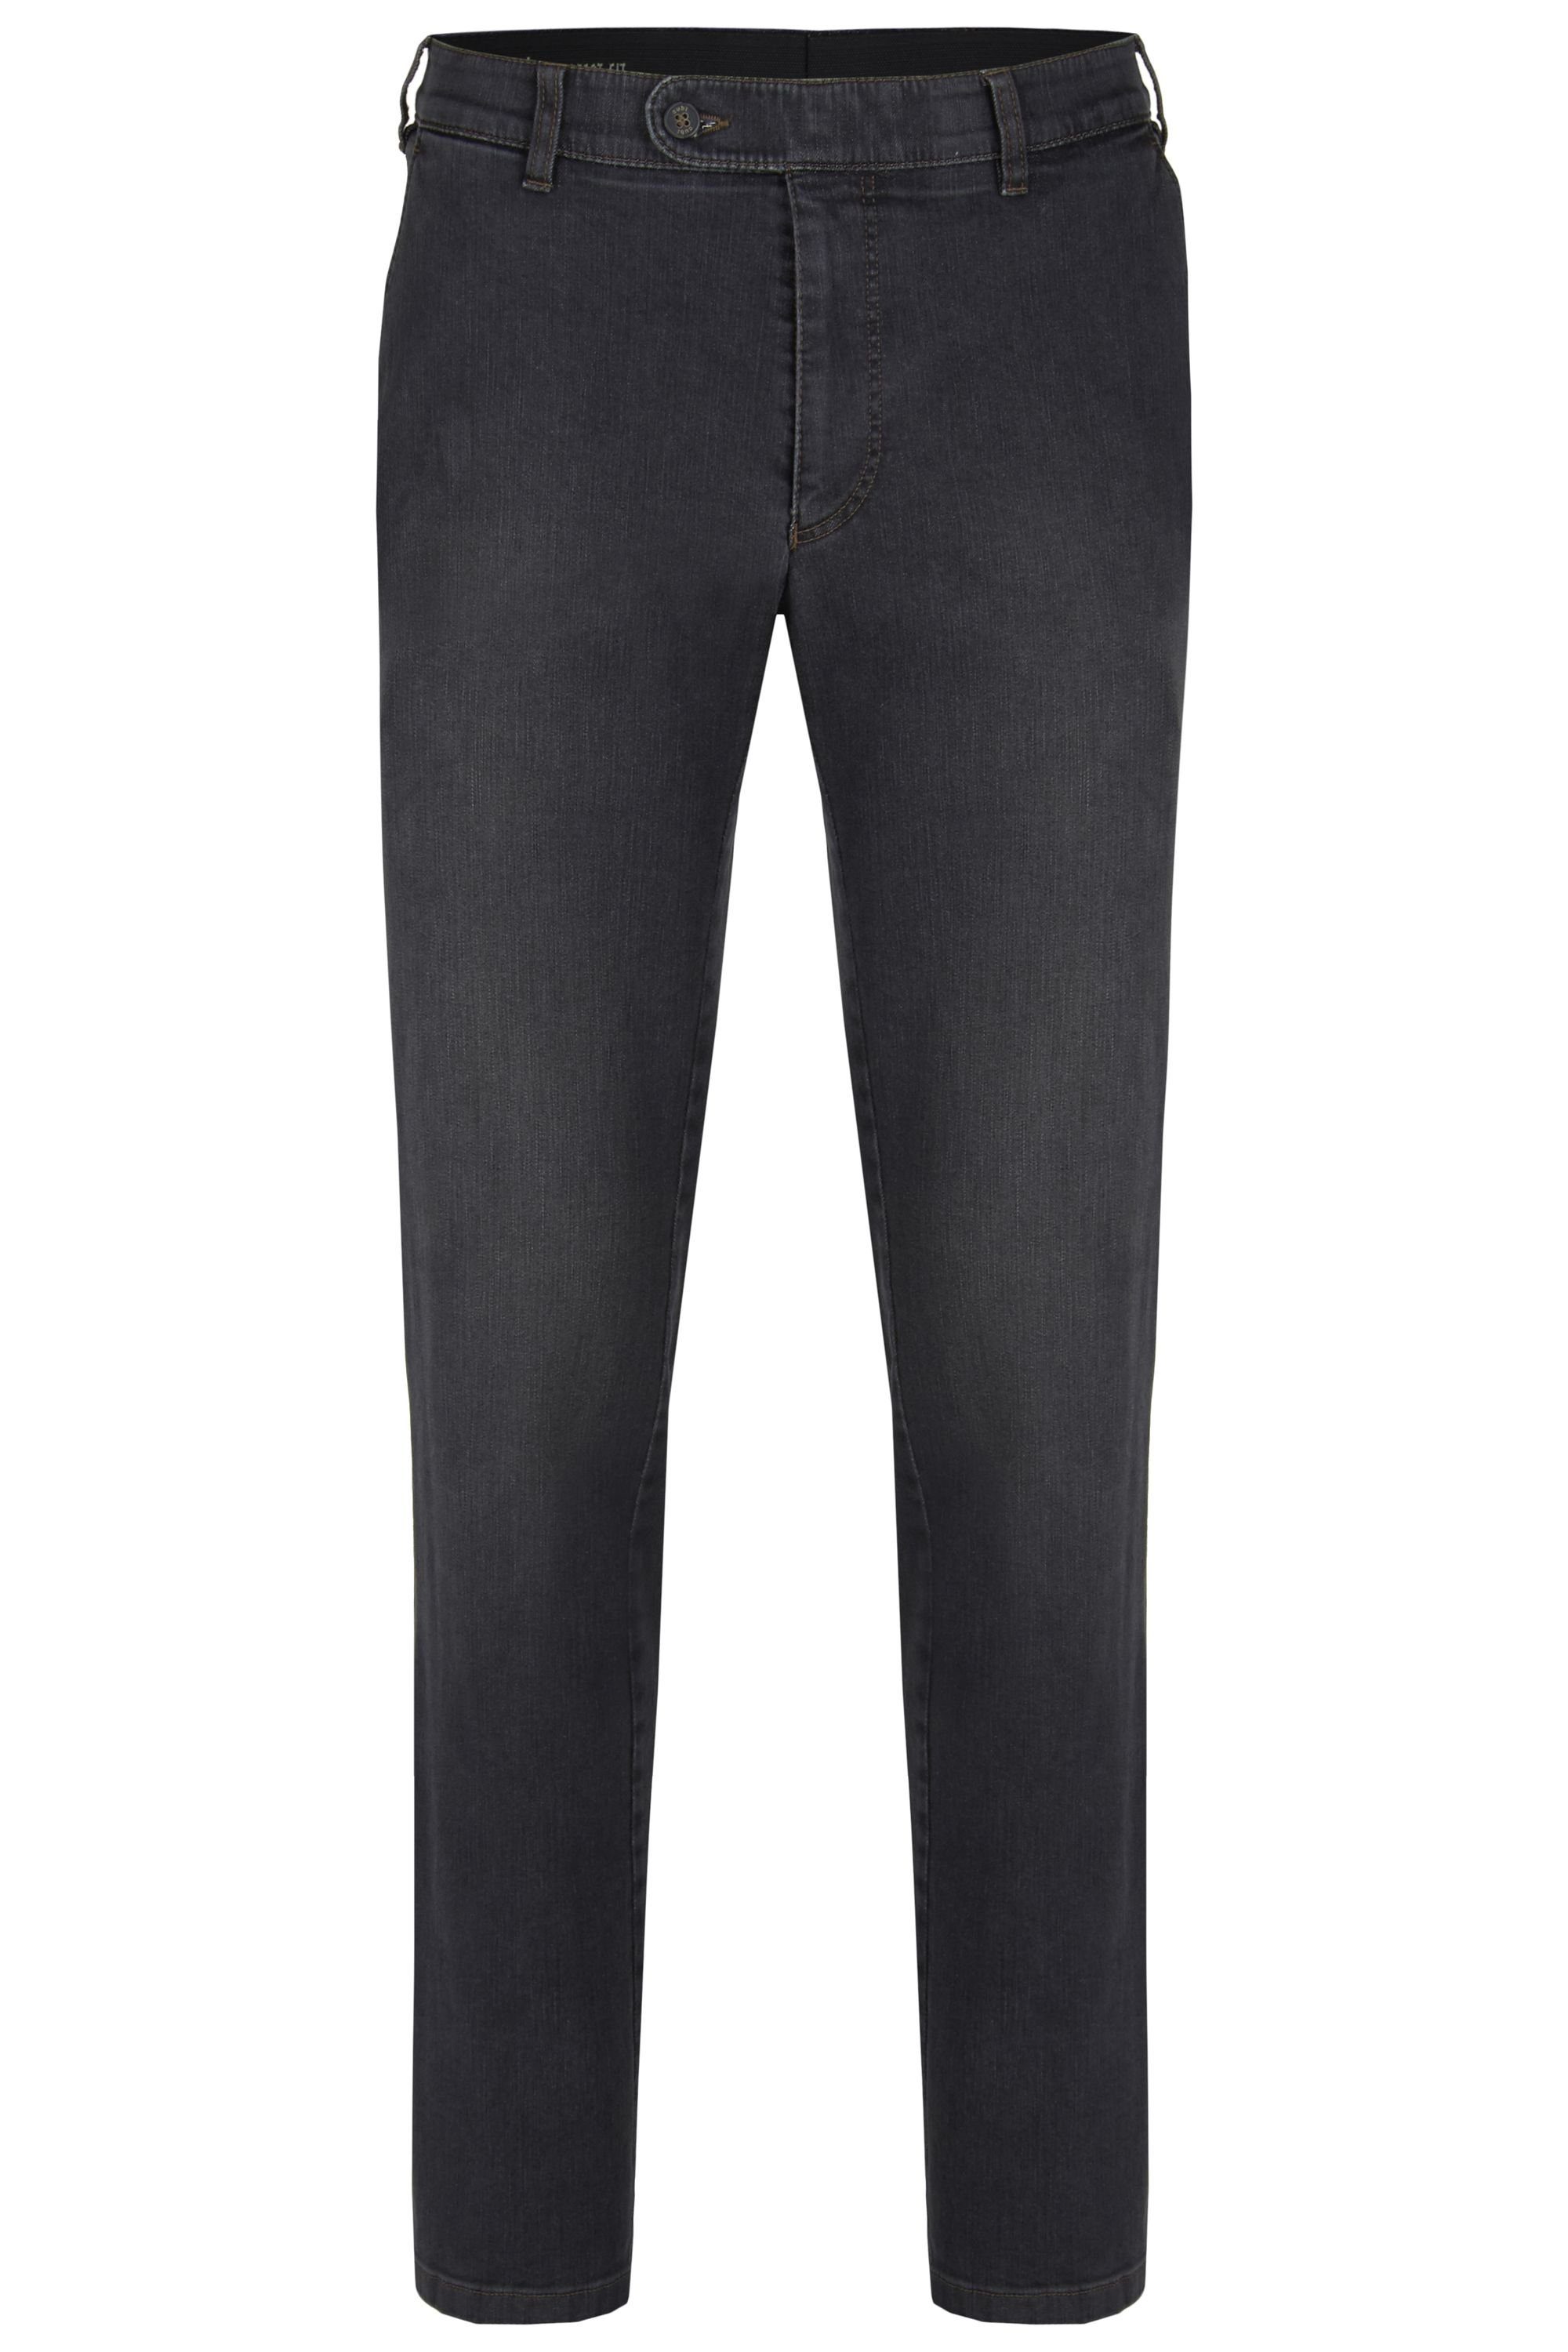 (53) Hose grey Herren Flex Modell Perfect 526 Bequeme Baumwolle aubi Fit Stretch High aubi: soft used aus Jeans Jeans